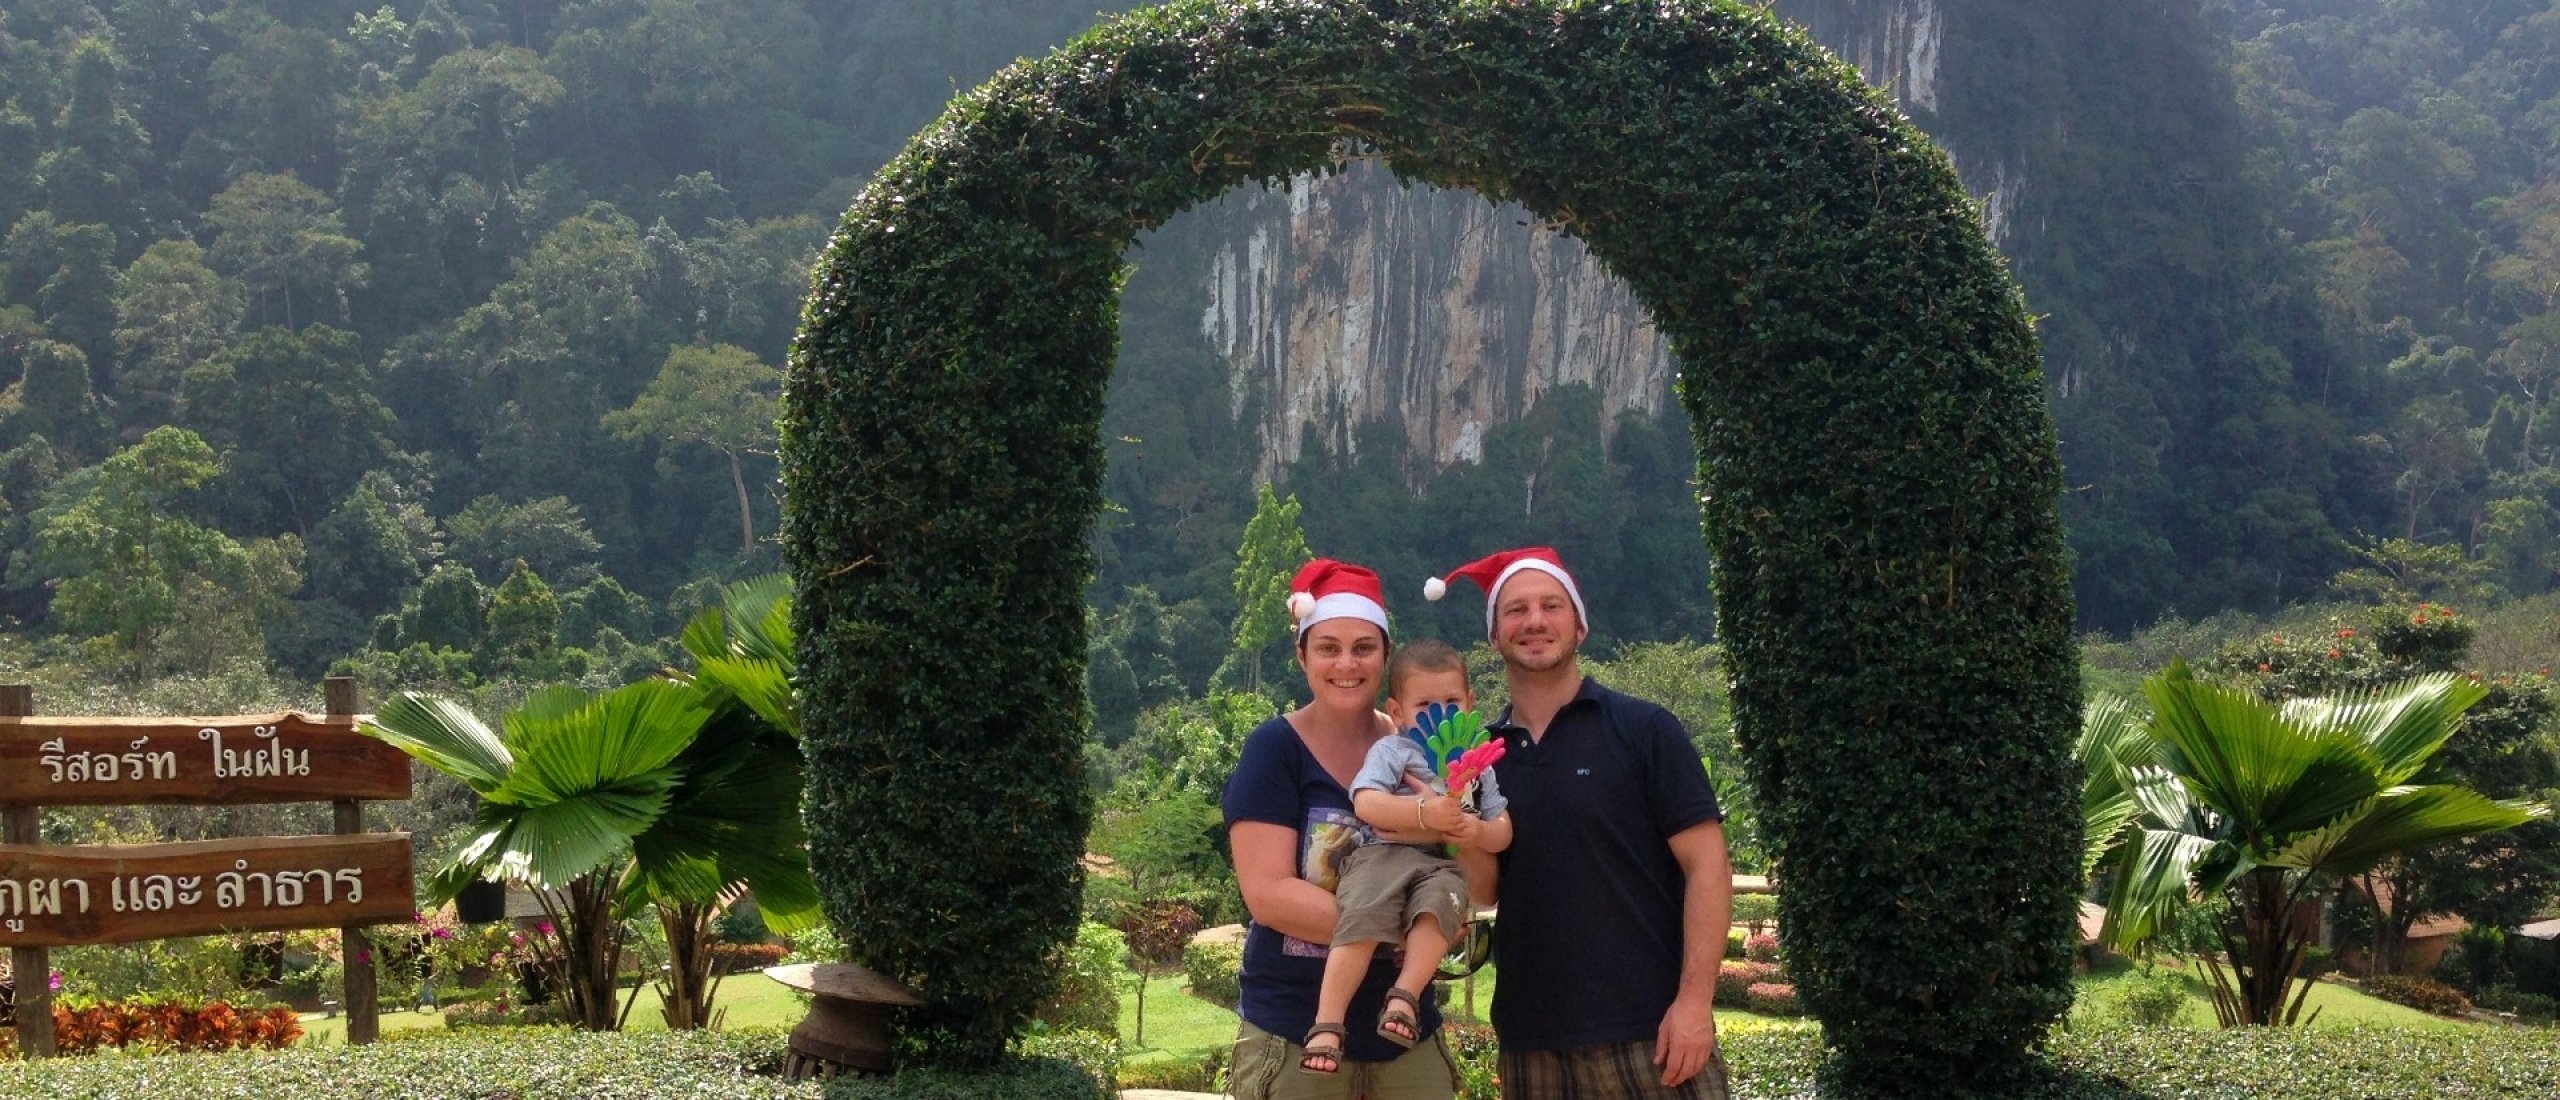 Kerstmis in Thailand met gezin